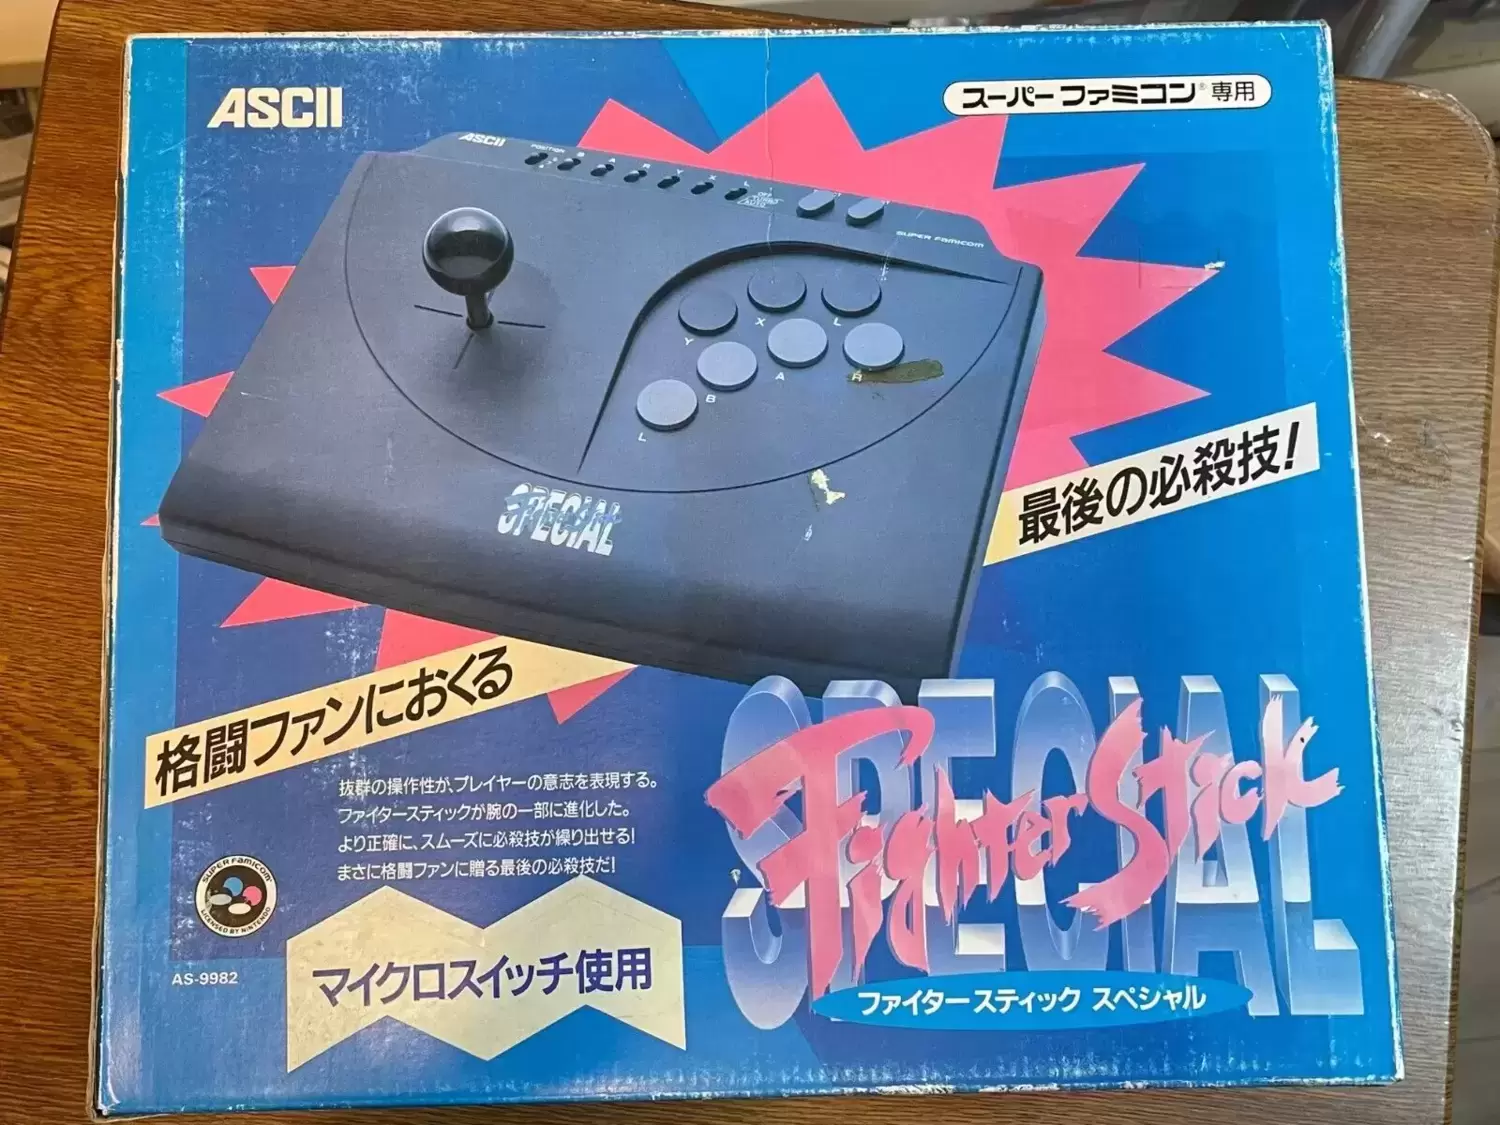 Arcade Stick - ASCII Special Fighter Stick